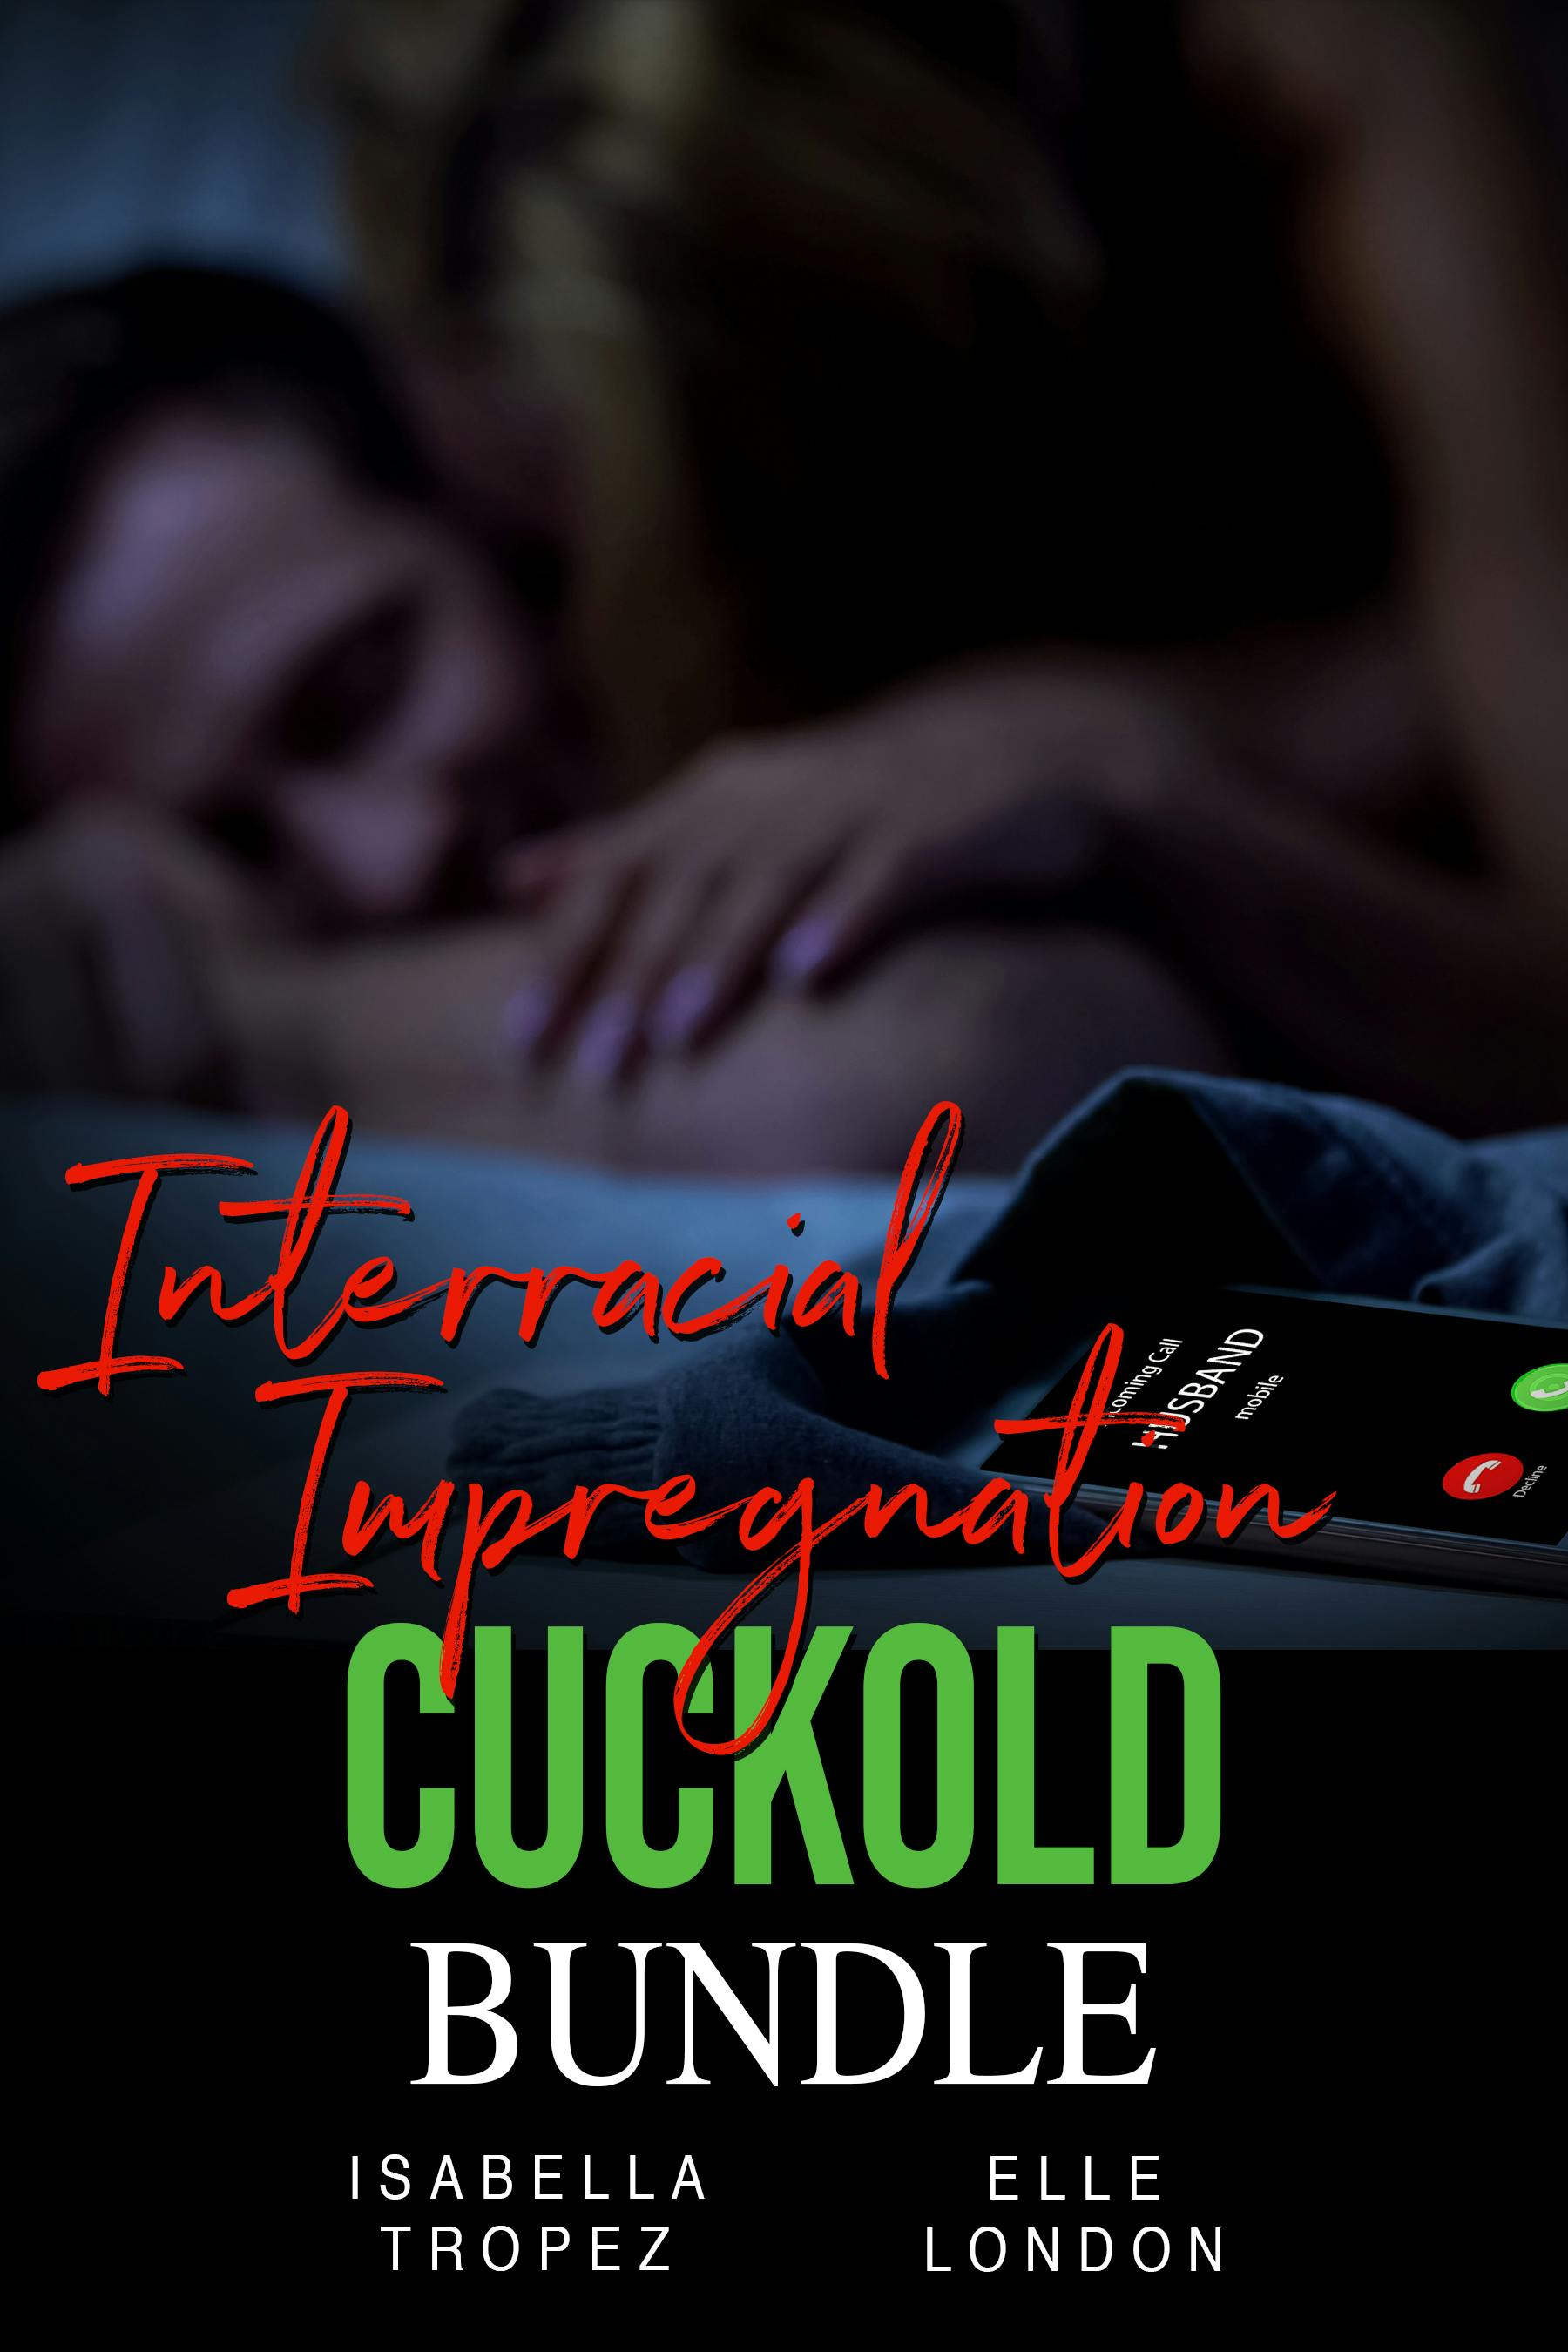 Interracial Impregnation Cuckold Bundle - Elle London, Isabella Tropez